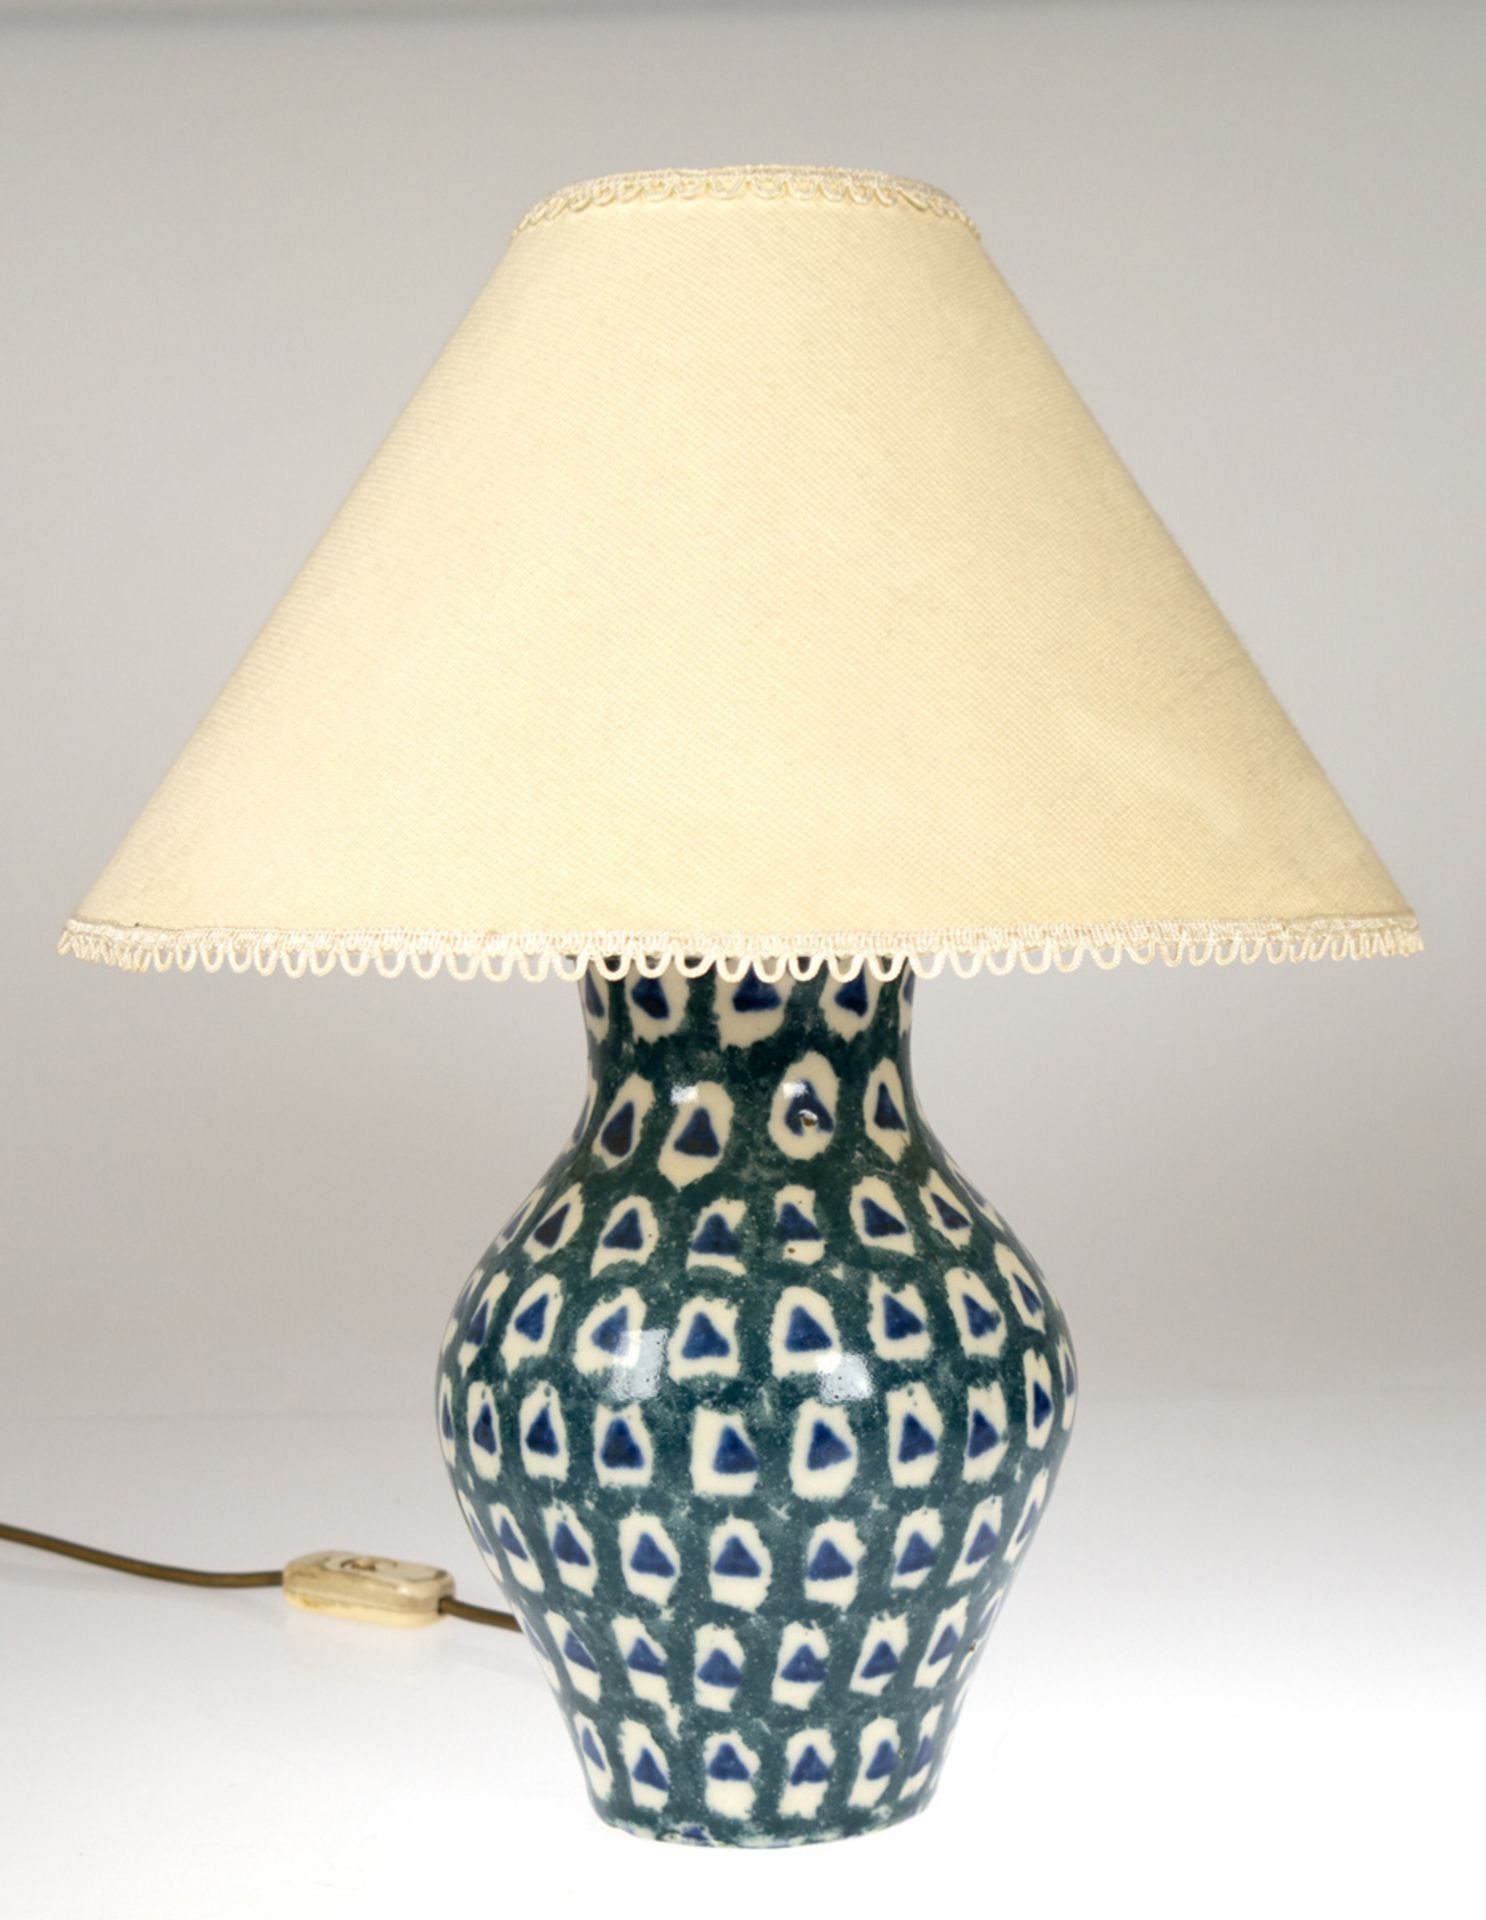 Tischlampe, vasenförmiger Keramikfuß, oramentaler Dekor auf grünem Grund, 1-flammig,beiger